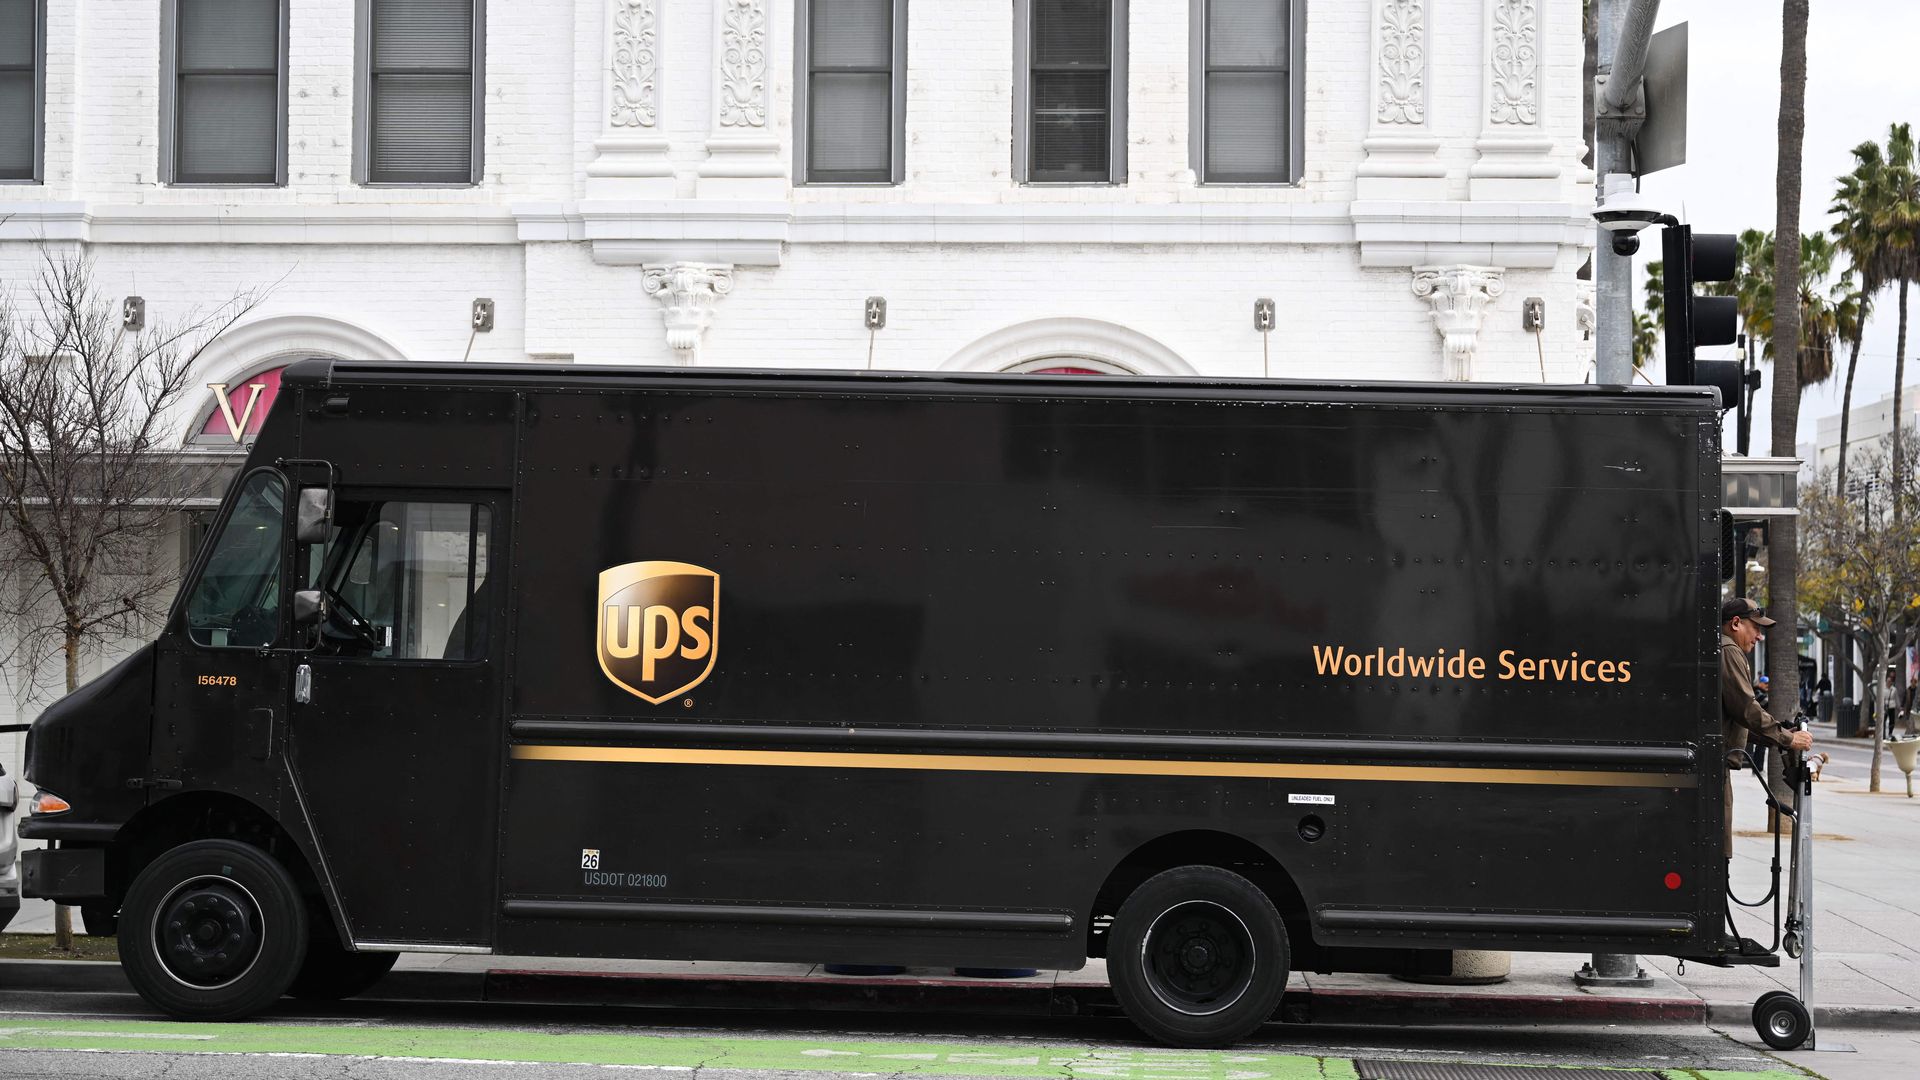 United Parcel Service (UPS) driver makes deliveries in Santa Monica, California on March 20